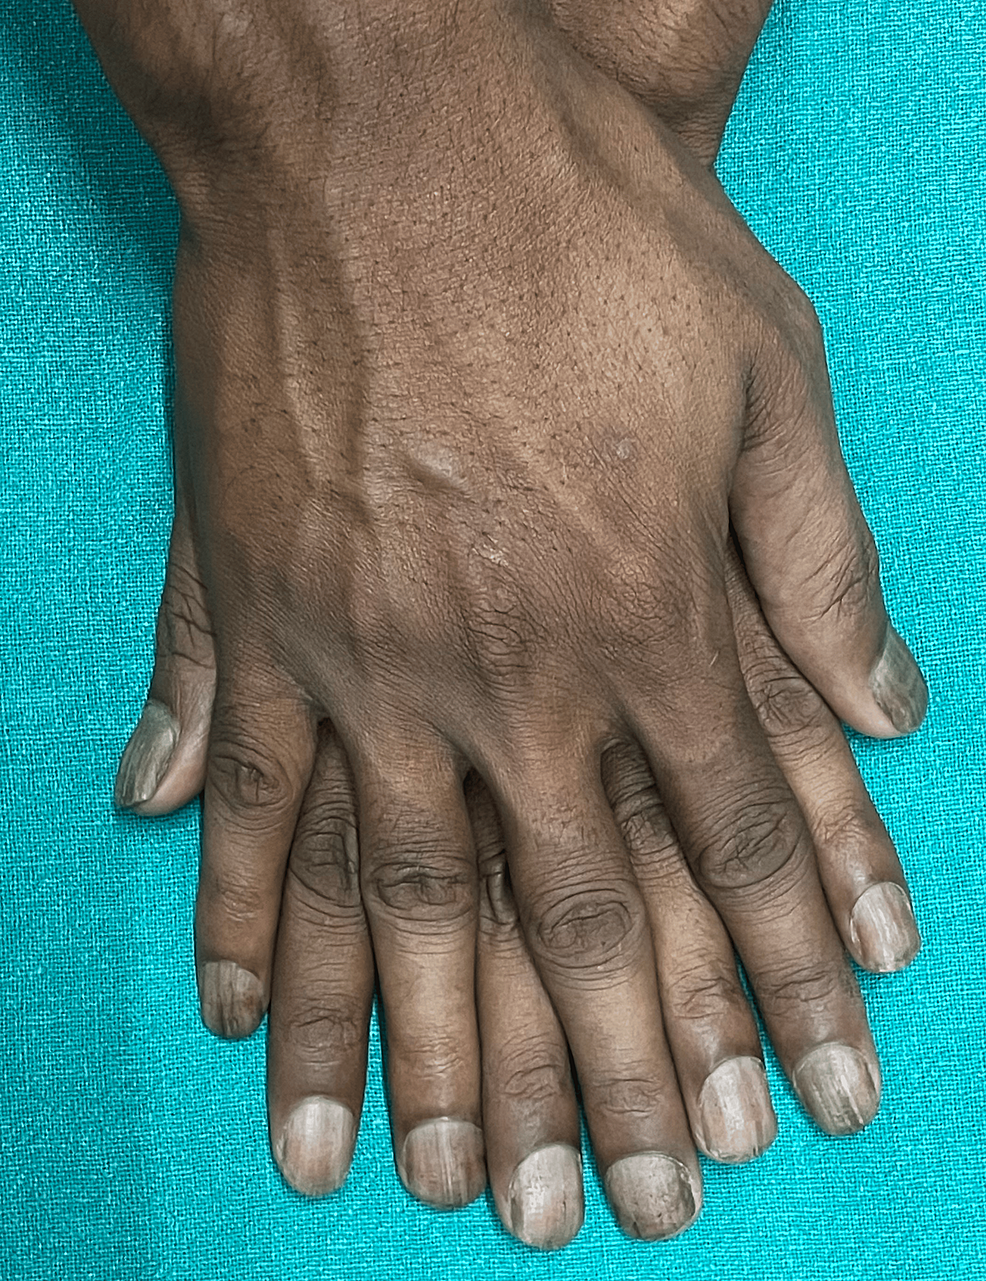 Fingernails with lichen planus disease - Stock Image - C058/5779 - Science  Photo Library